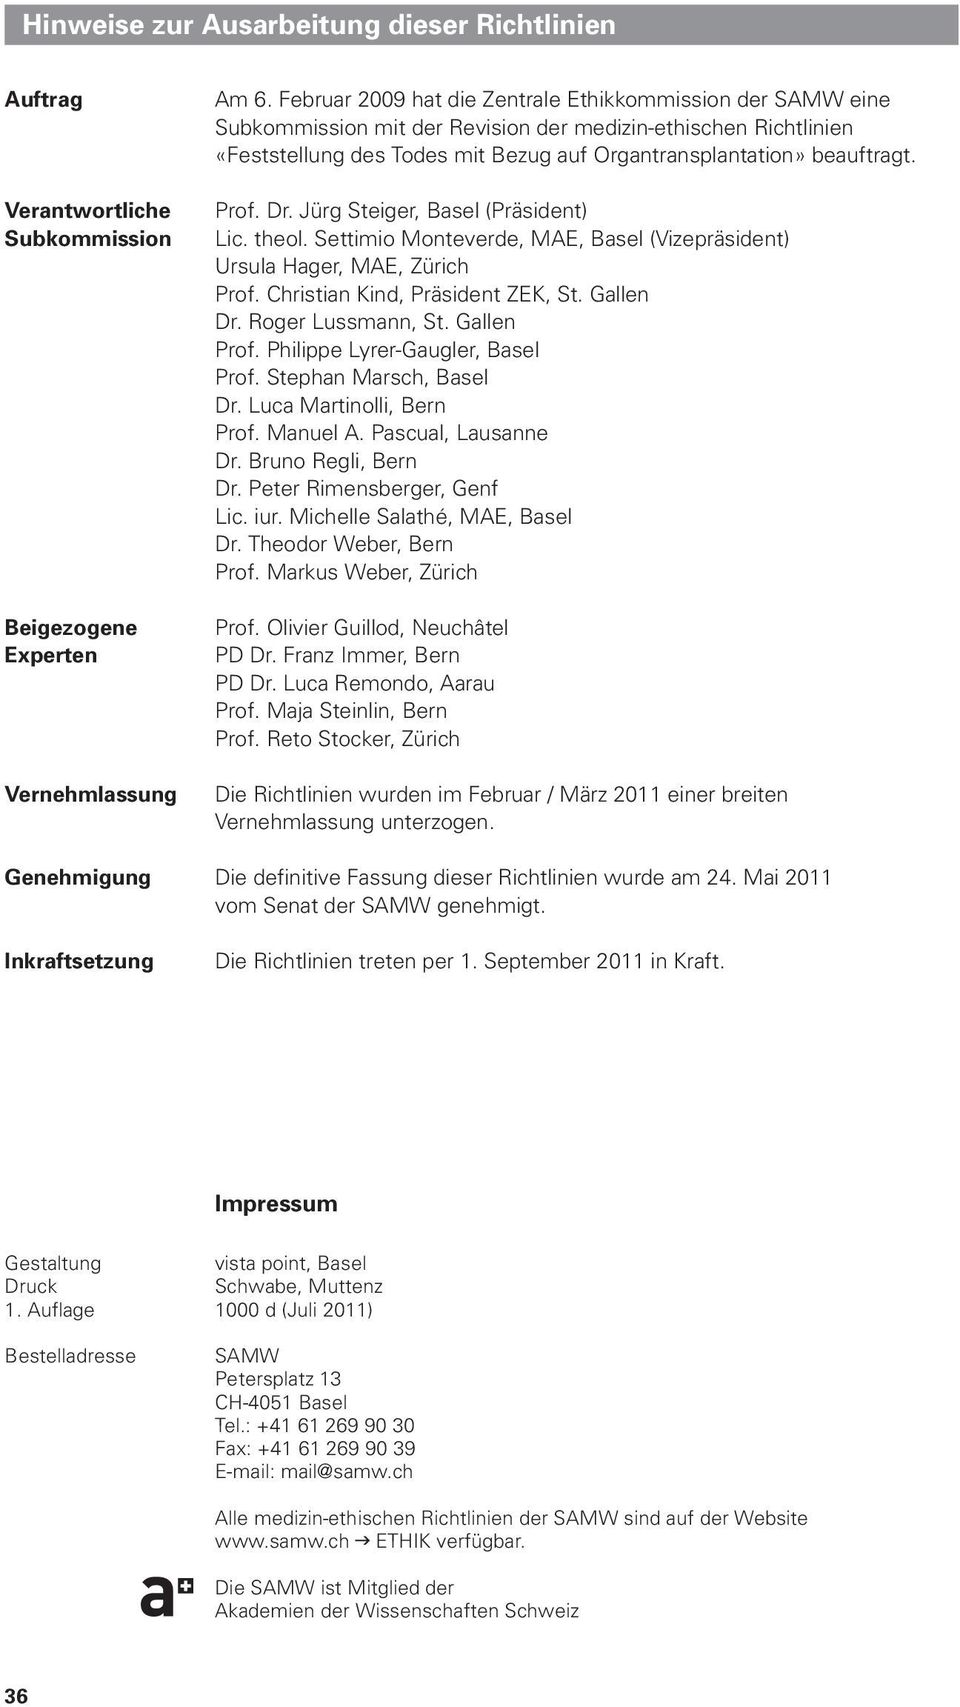 Prof. Dr. Jürg Steiger, Basel (Präsident) Lic. theol. Settimio Monteverde, MAE, Basel (Vizepräsident) Ursula Hager, MAE, Zürich Prof. Christian Kind, Präsident ZEK, St. Gallen Dr. Roger Lussmann, St.